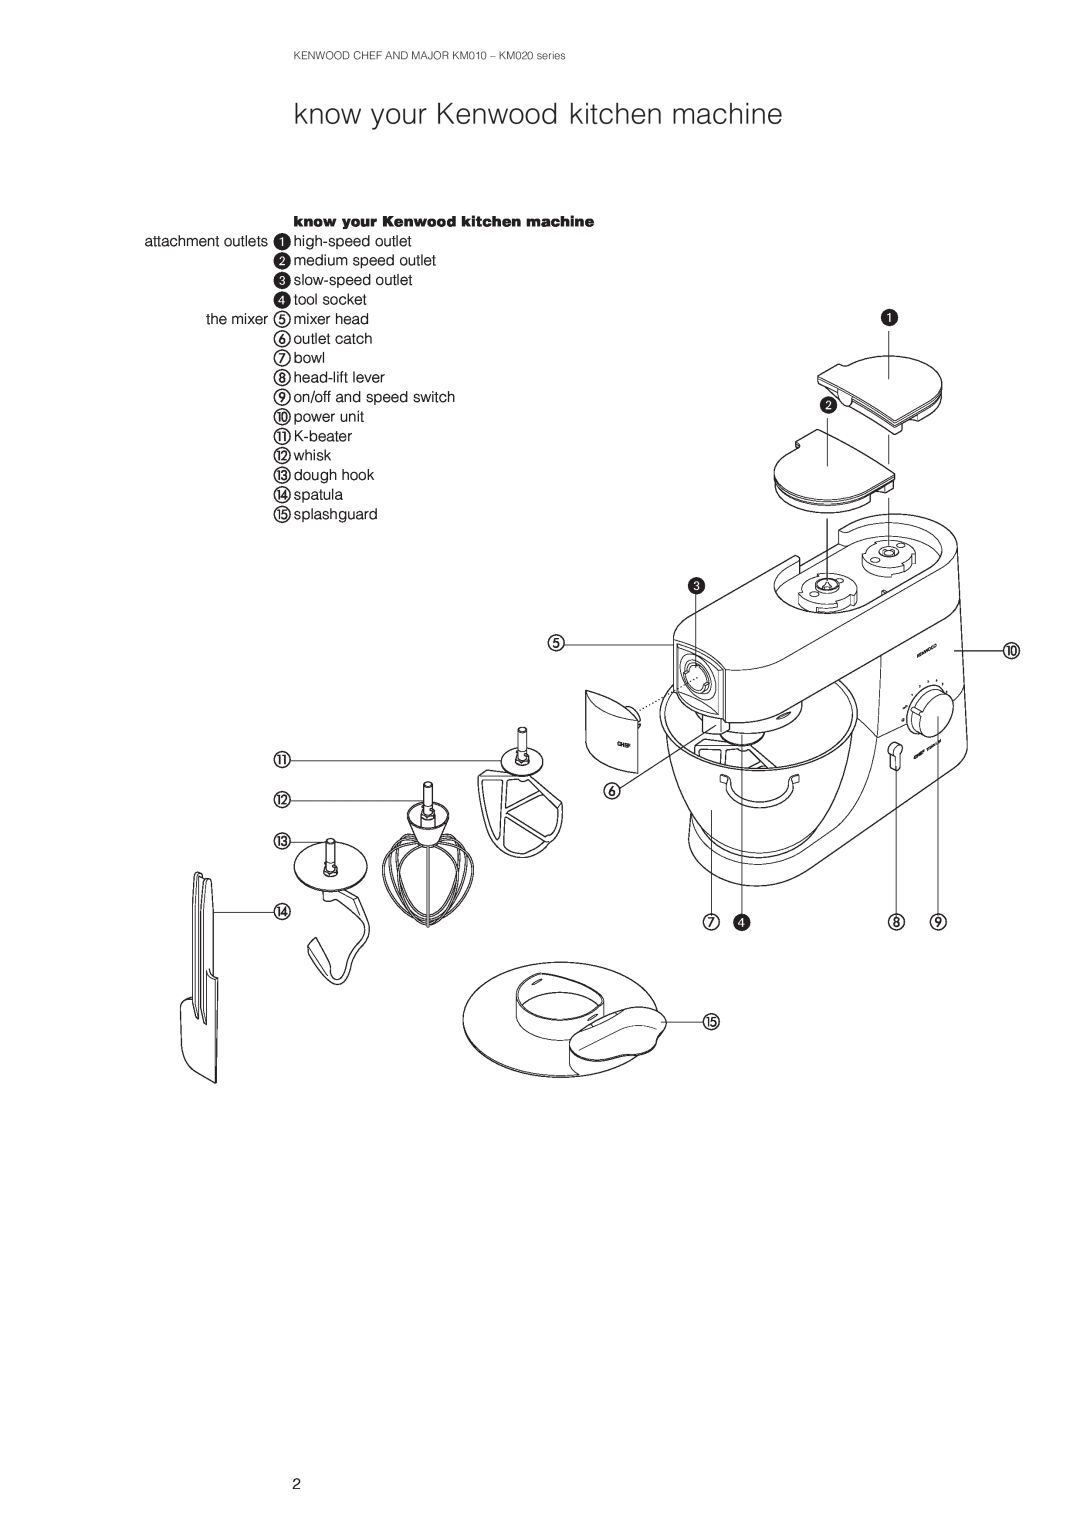 Kenwood KM020, KM010 manual know your Kenwood kitchen machine 